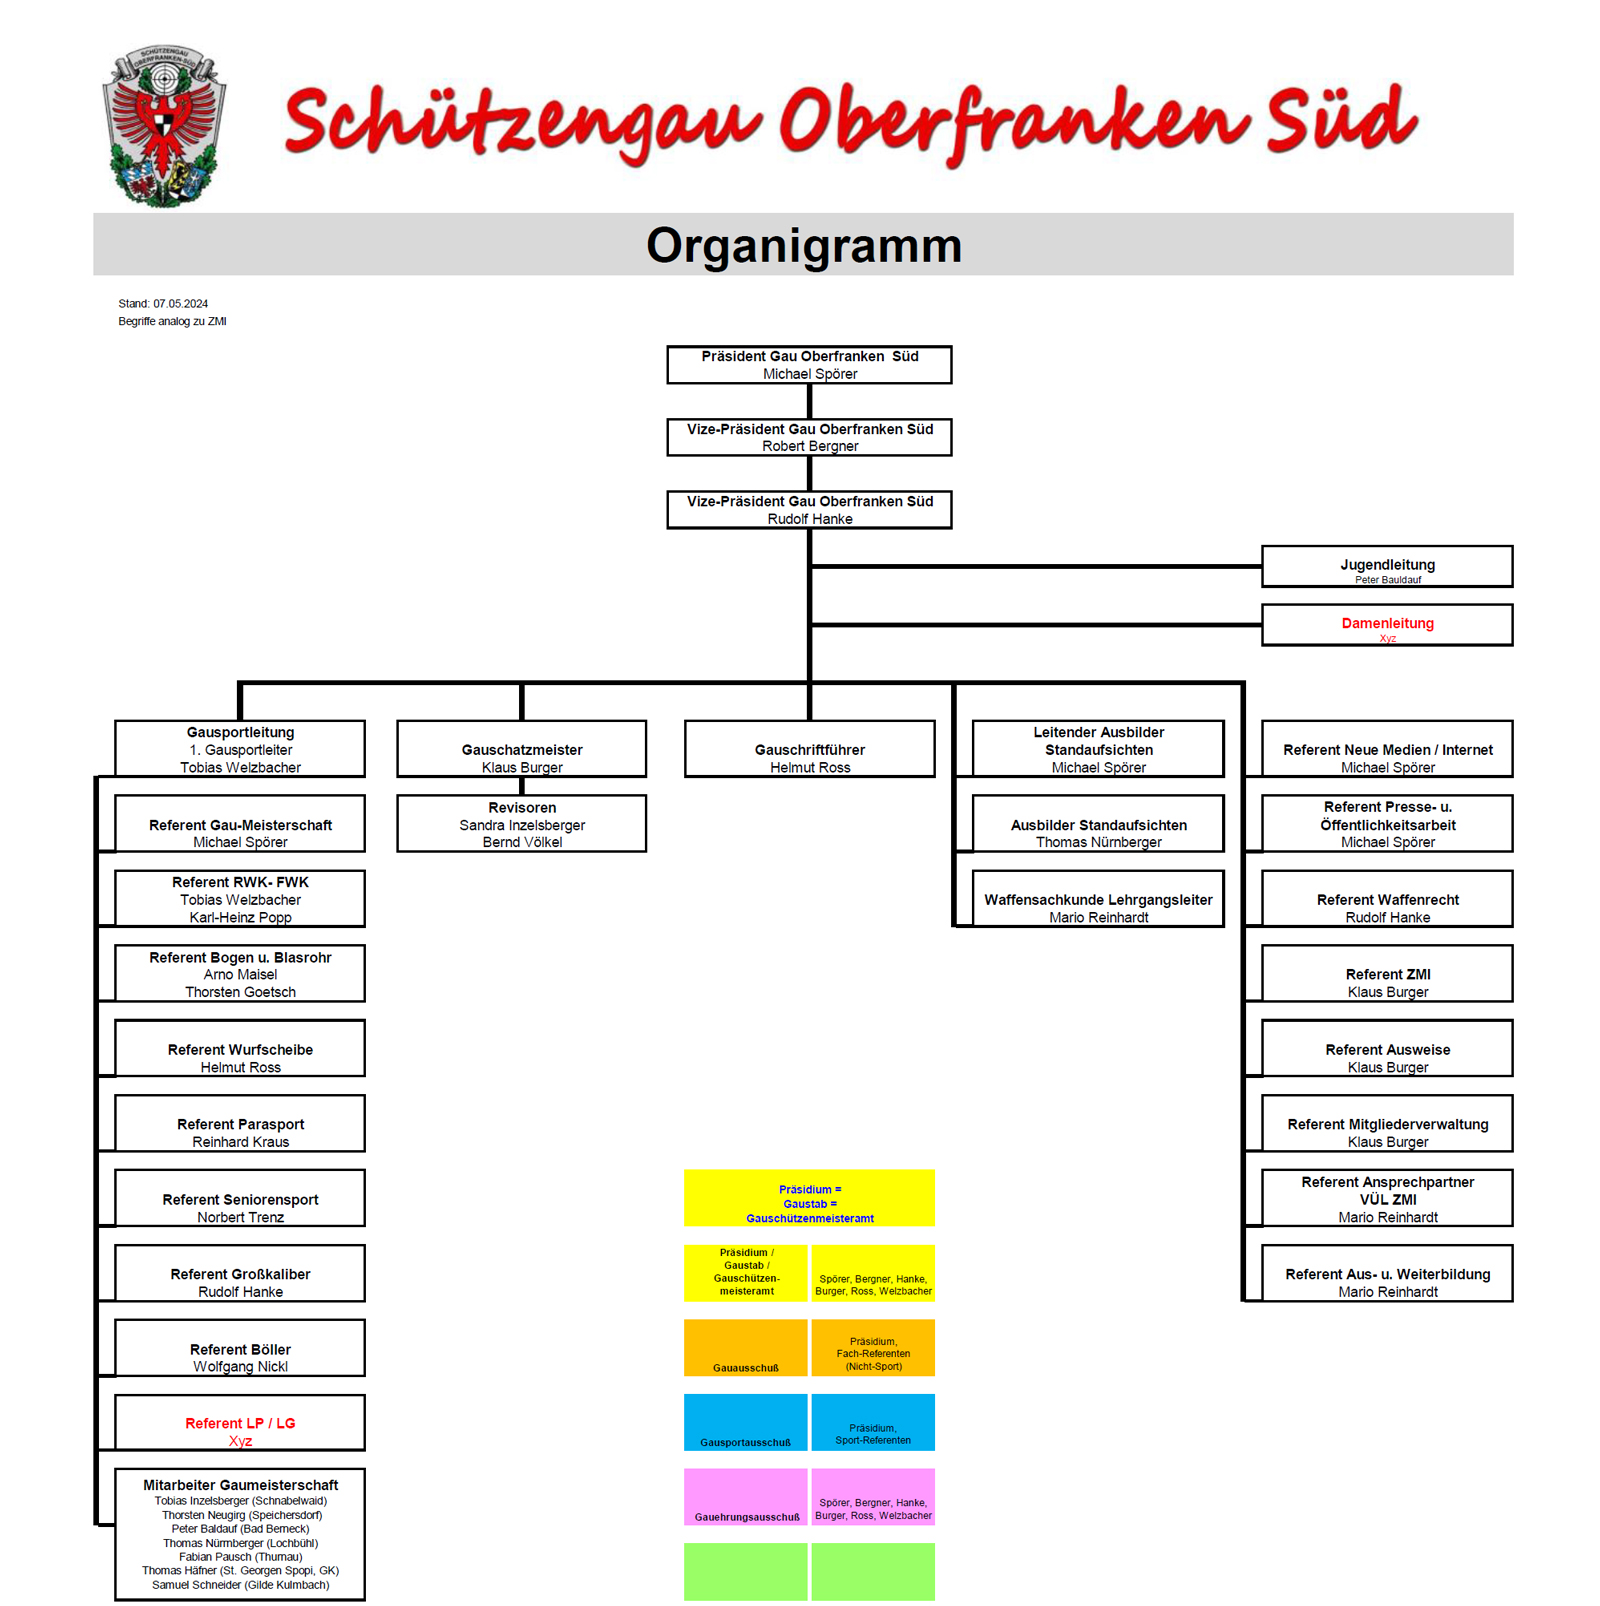 Organigram Schützengau Oberfranken Süd